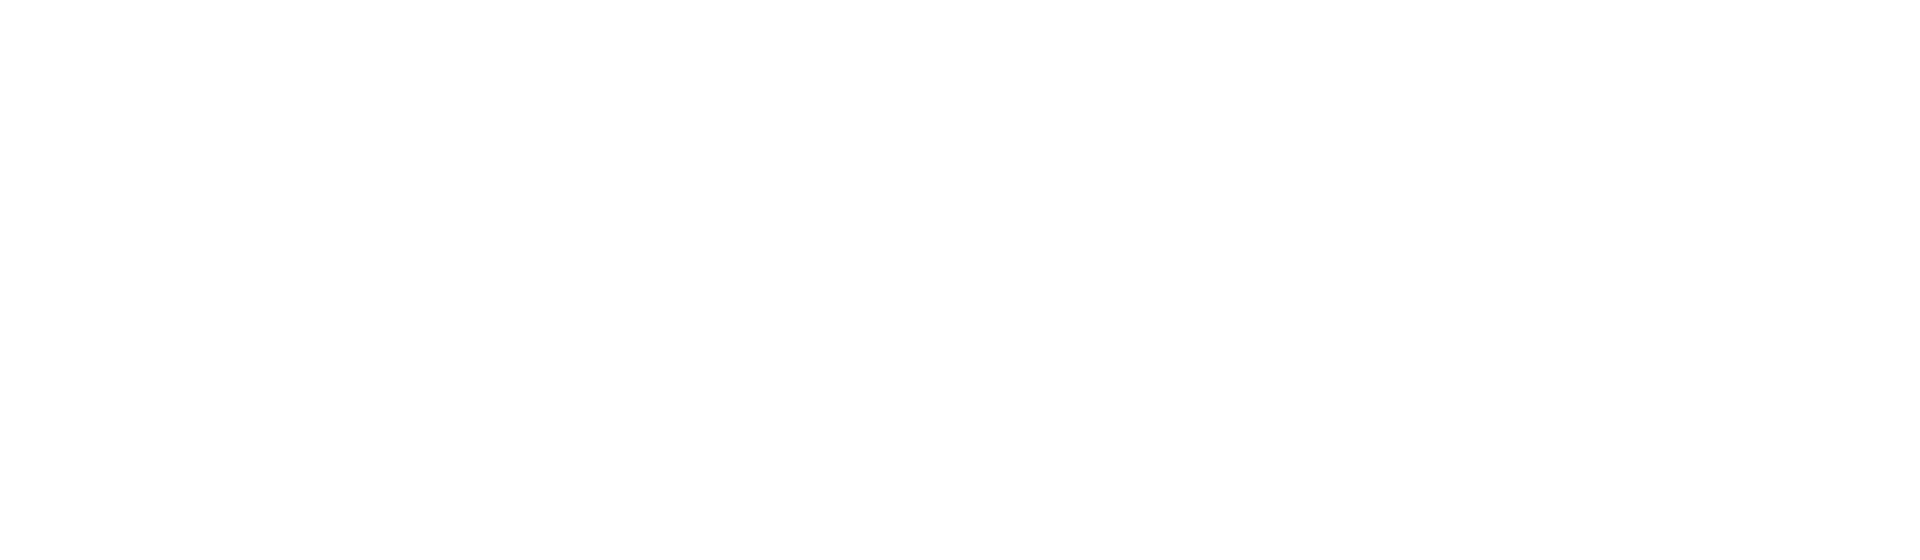 Celebrity Science